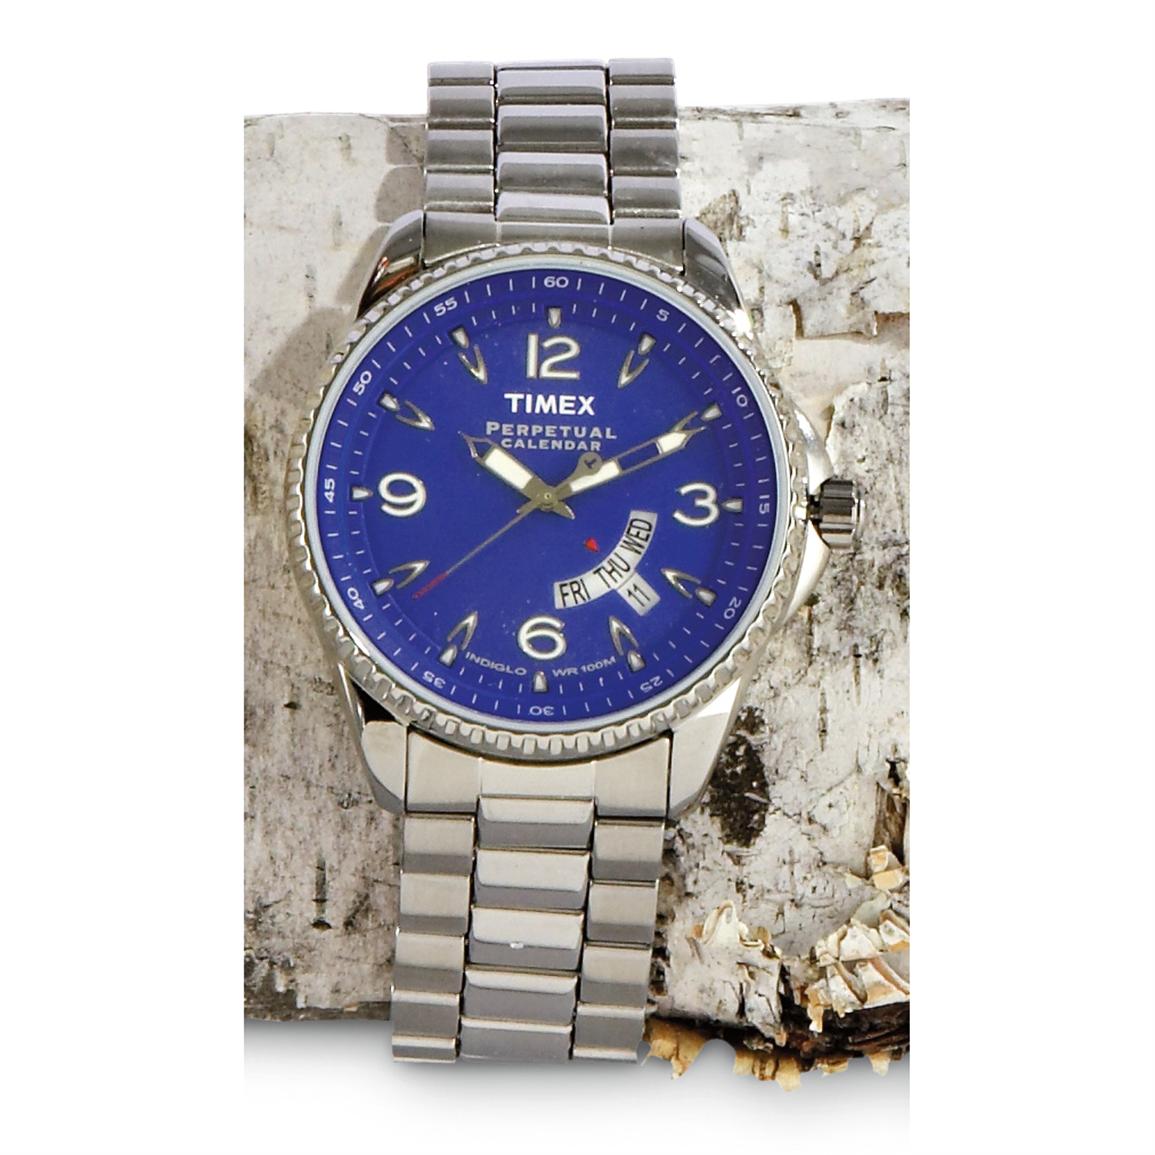 Timex Perpetual Calendar Watch Customize and Print